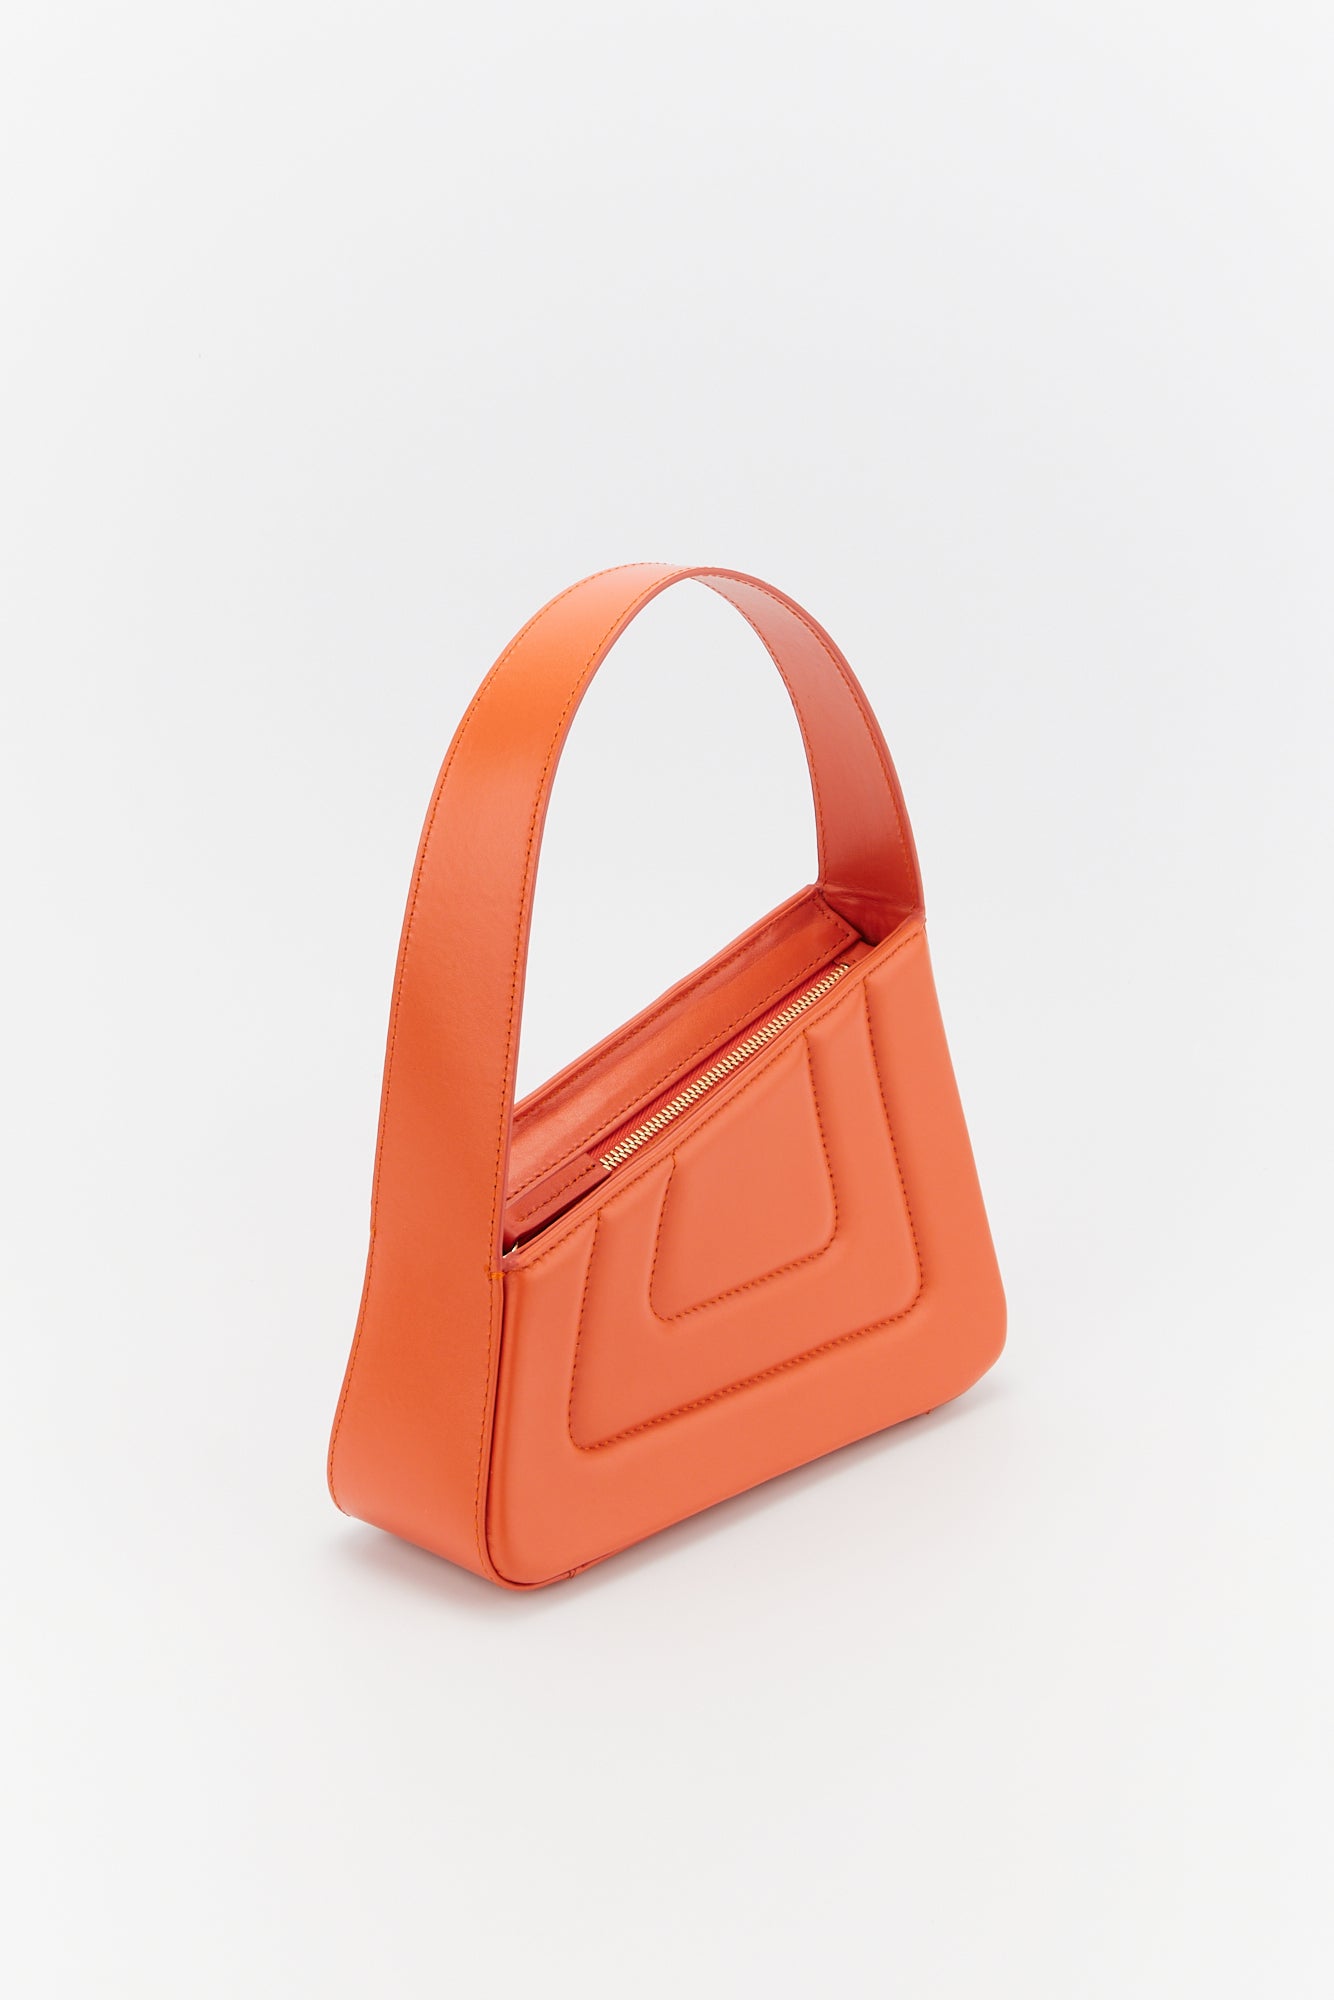 ORANGE Asymmetric Leather Quilted Mini Bag